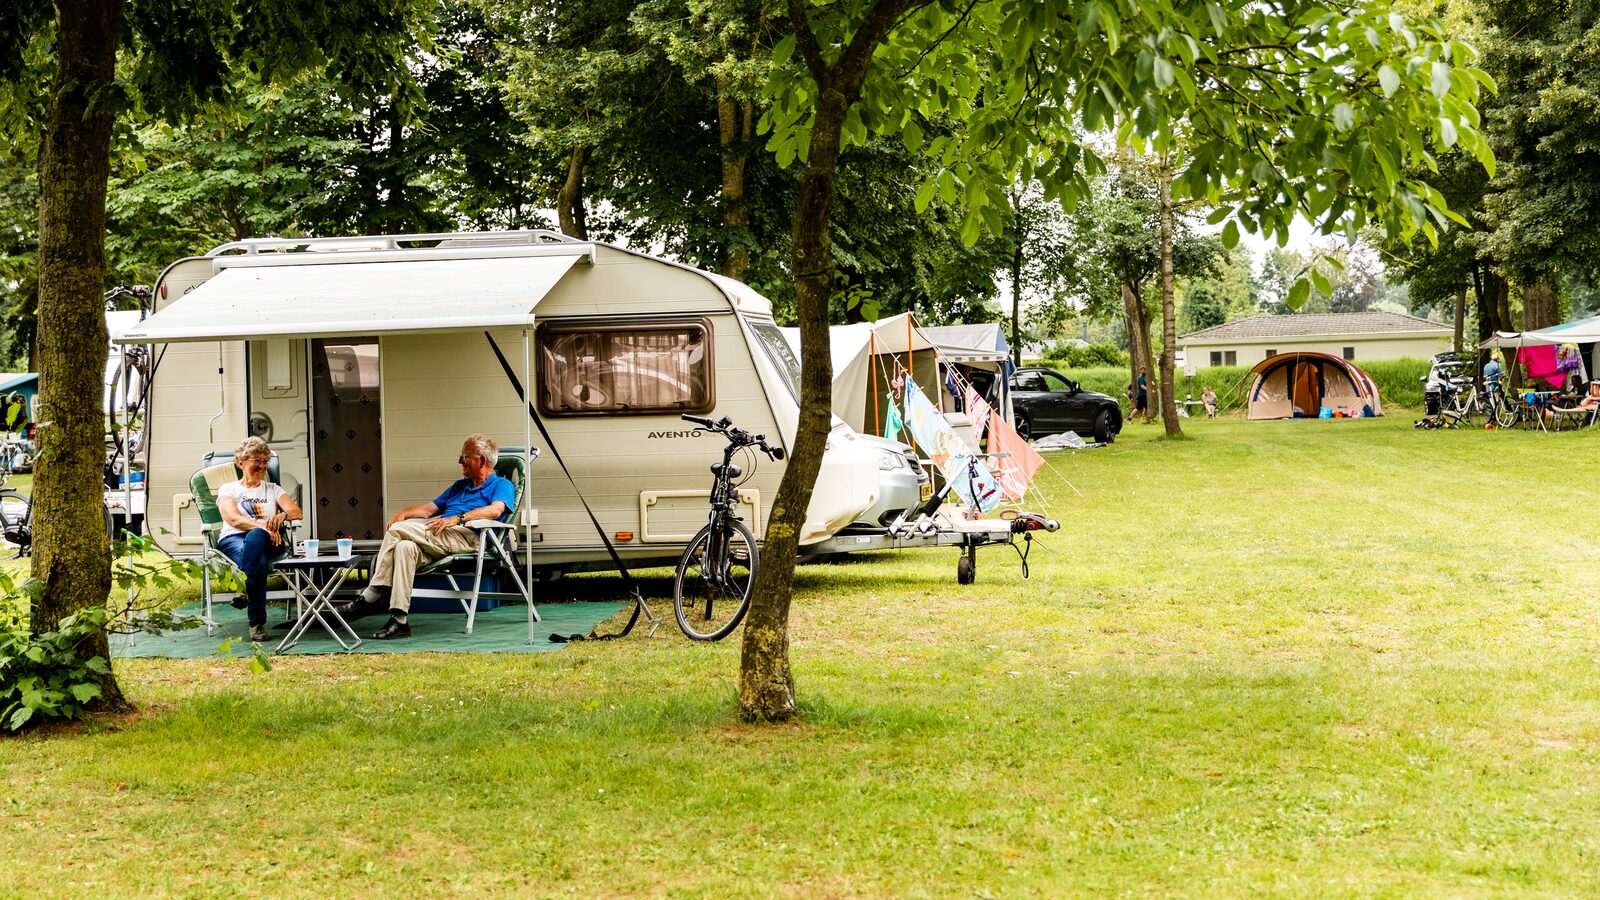 Campingplätze in den Niederlanden